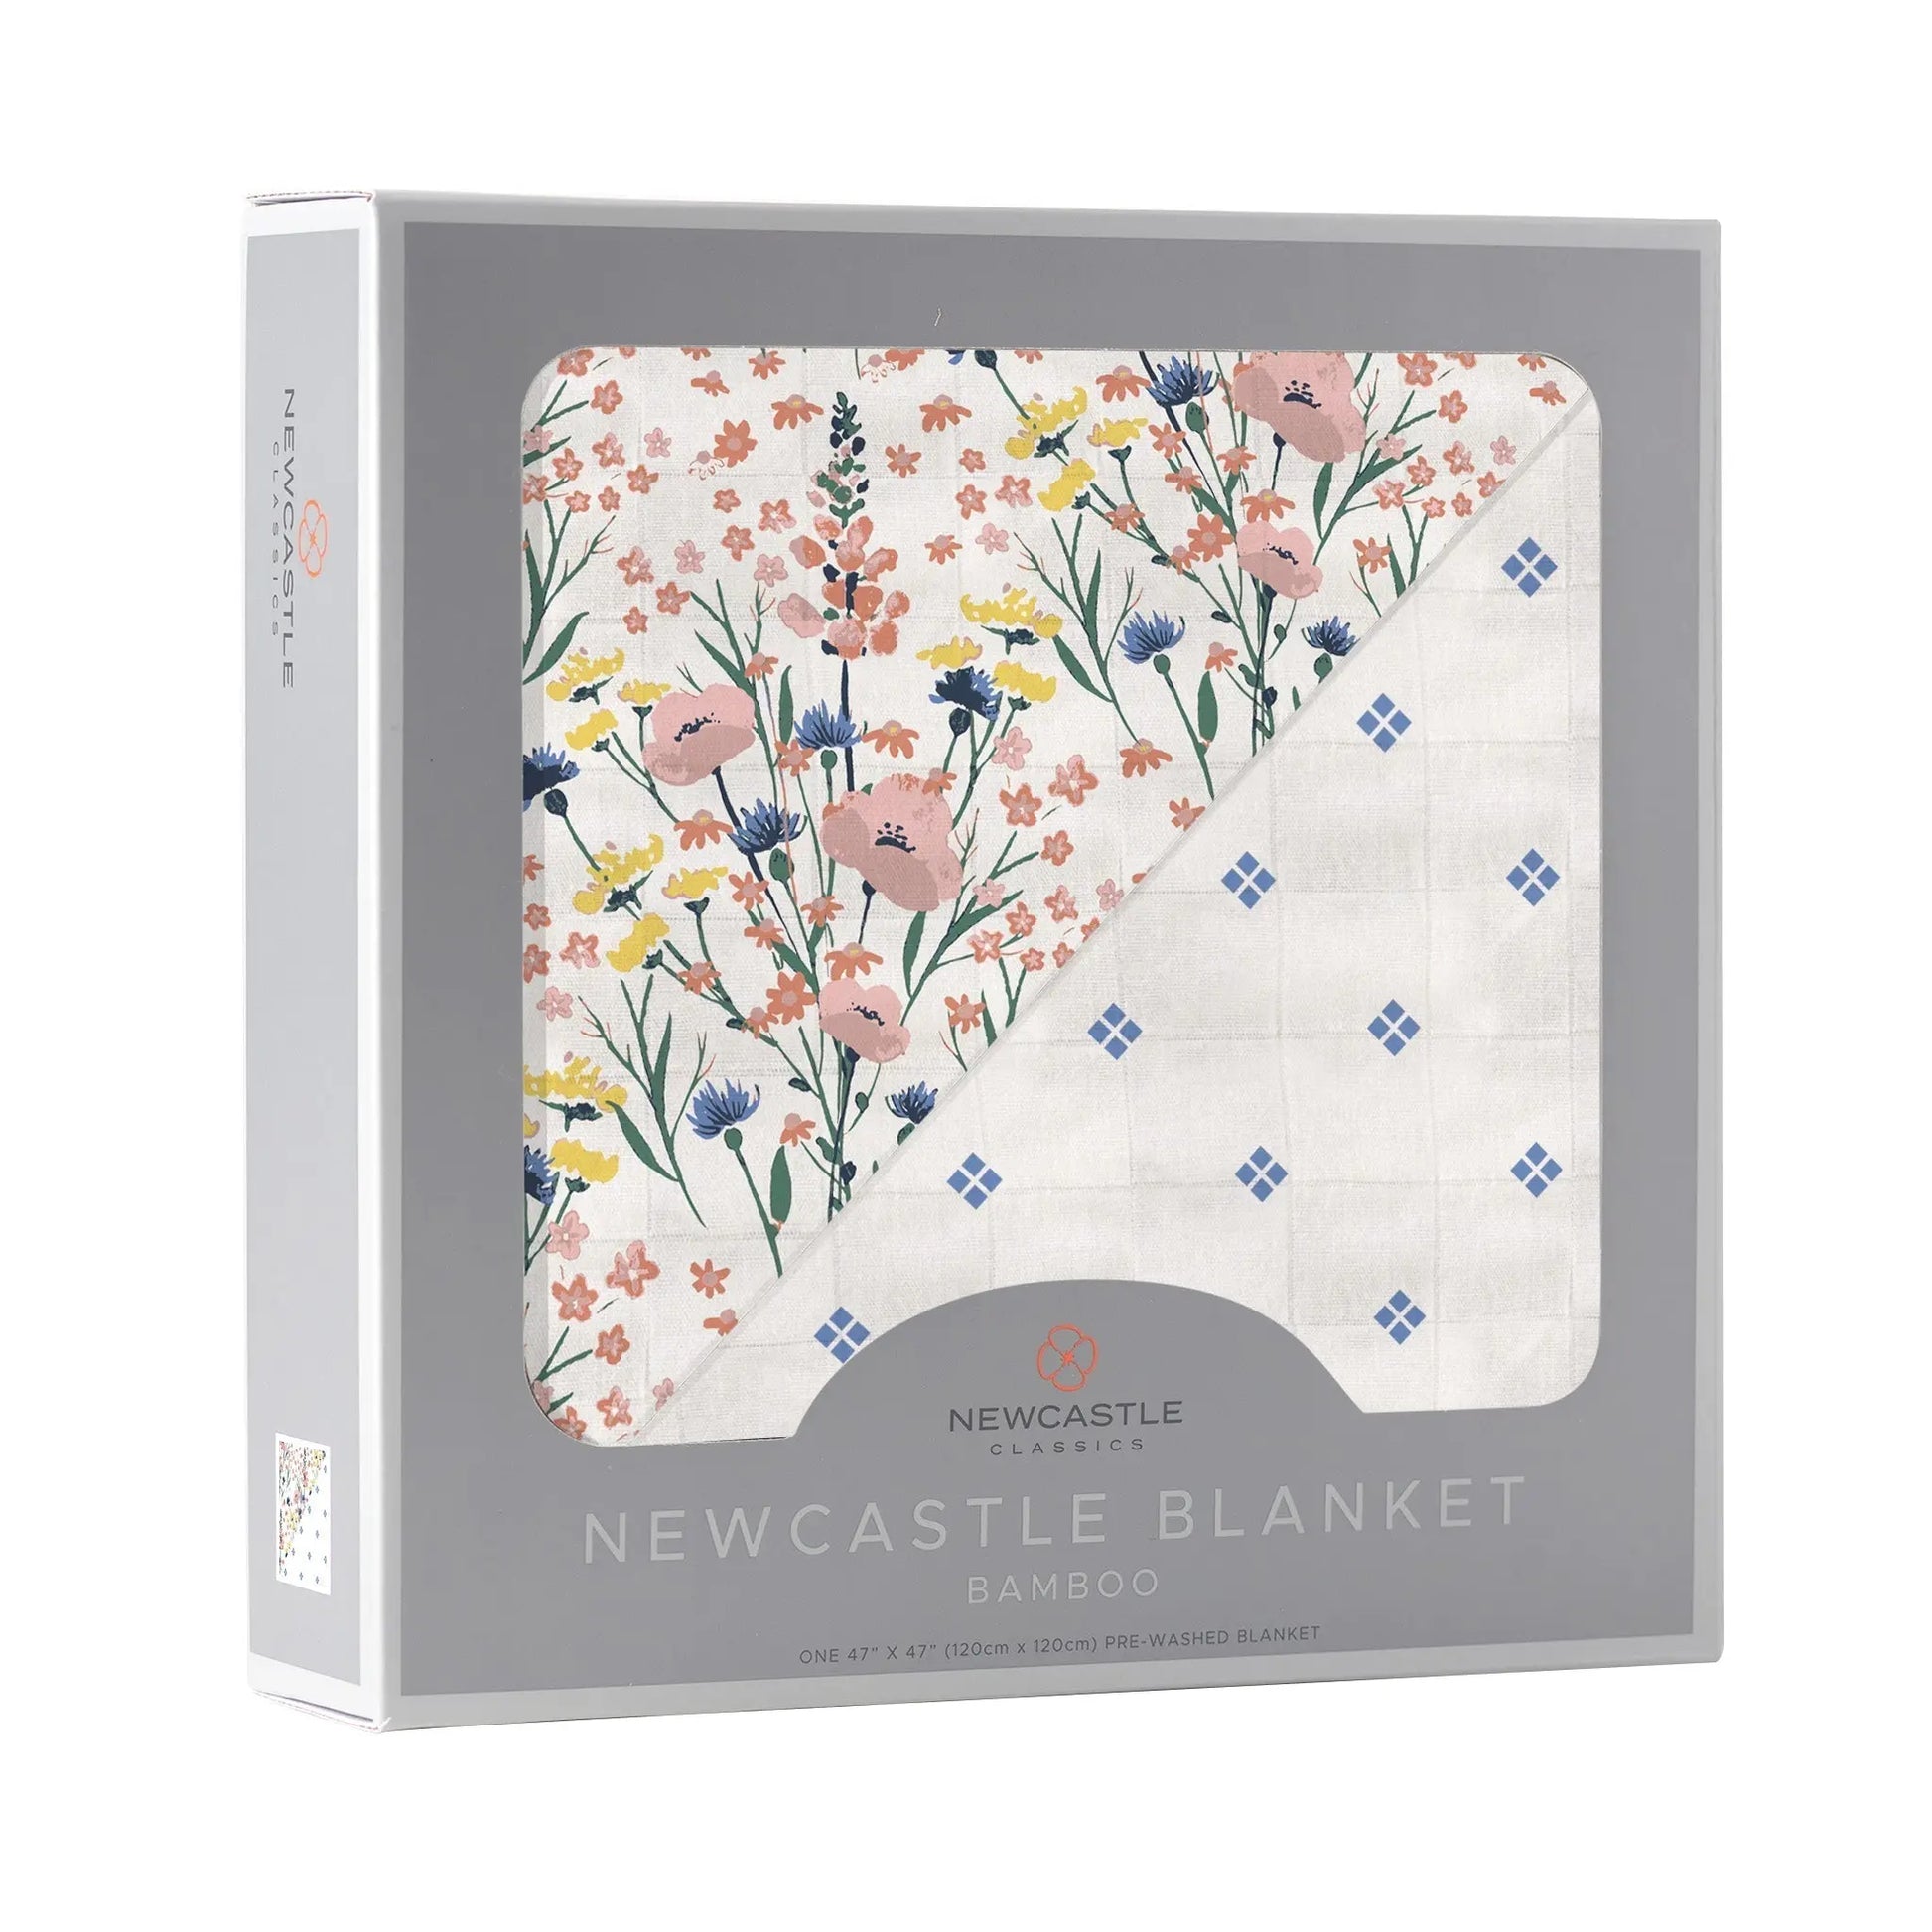 Blanket | Bamboo Muslin - Wildflowers & Periwinkle Diamond Newcastle Classics